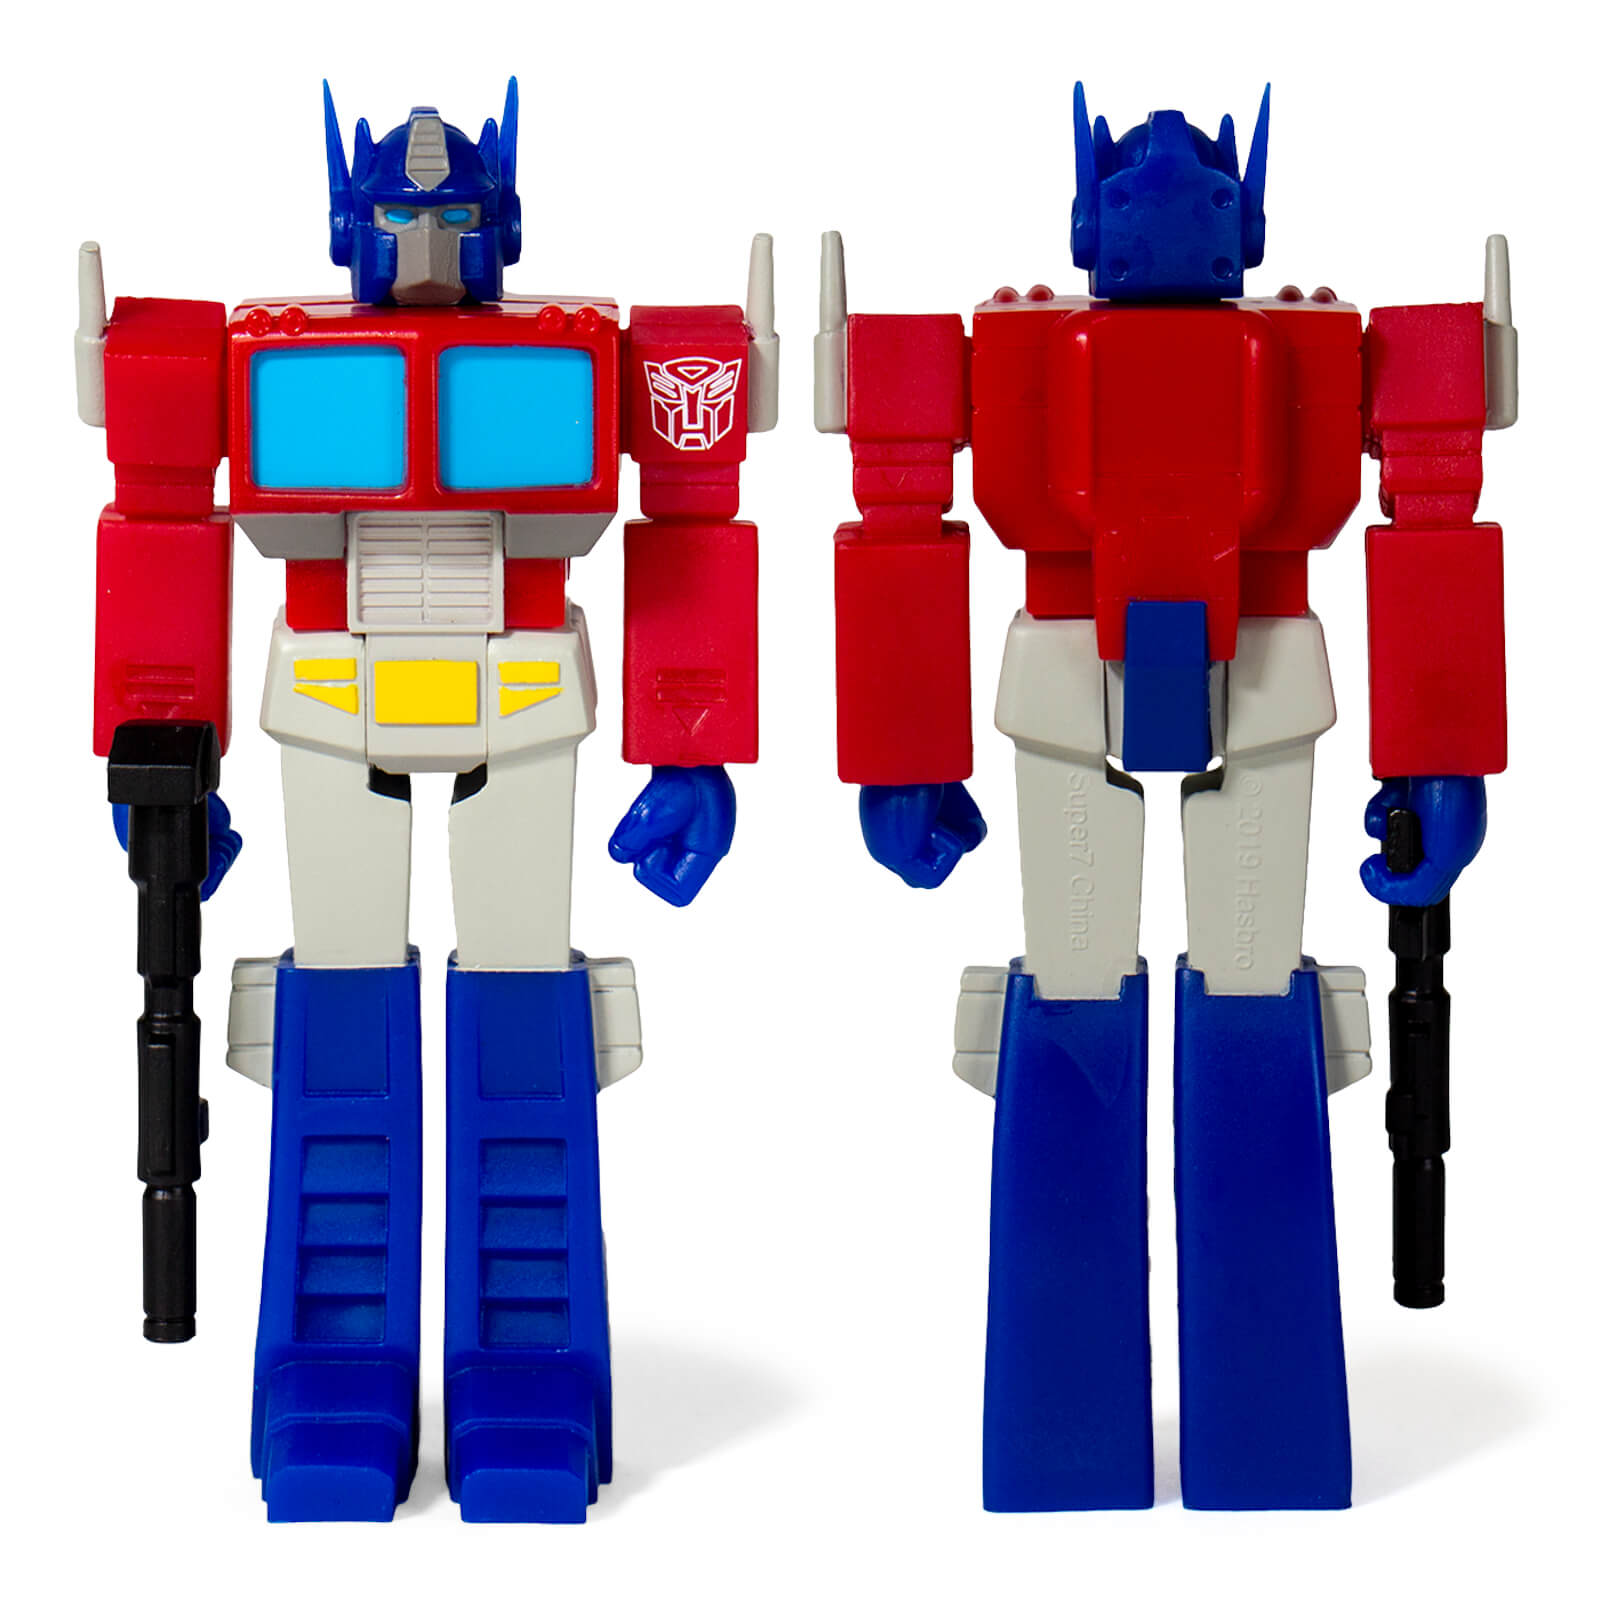 Super7 Transformers ReAction Figure - Optimus Prime